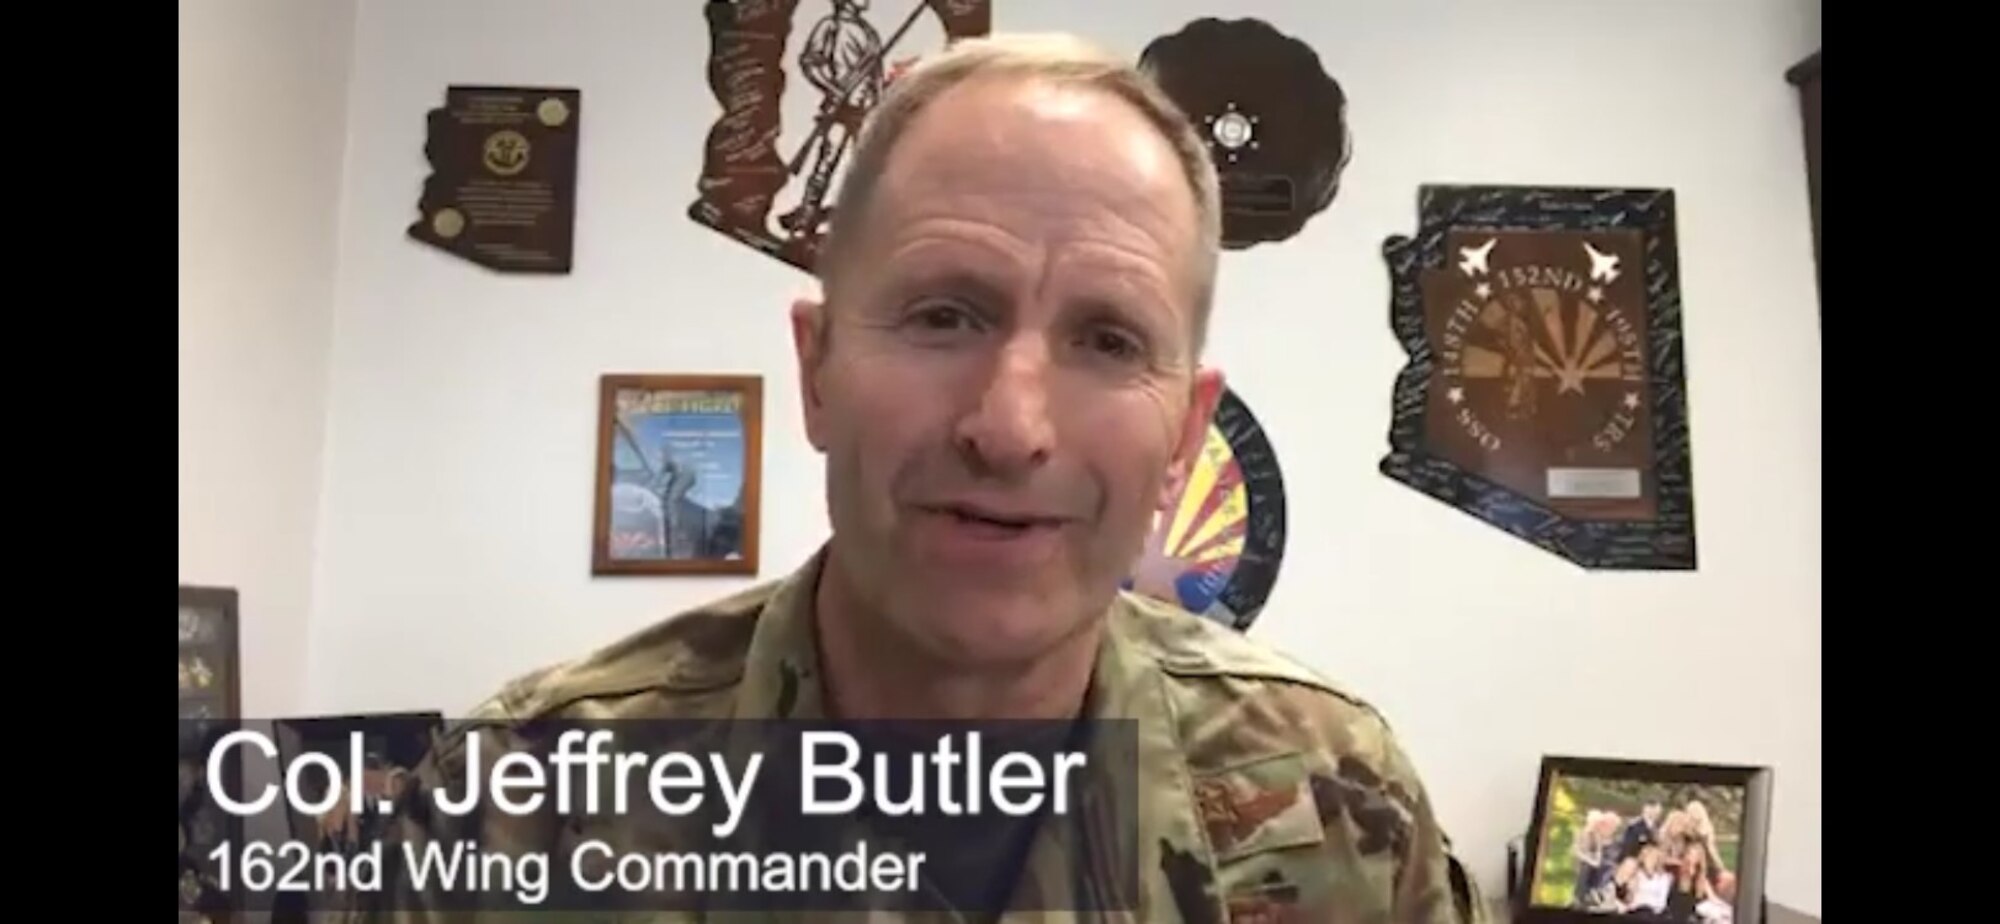 Col. Jeffrey butler